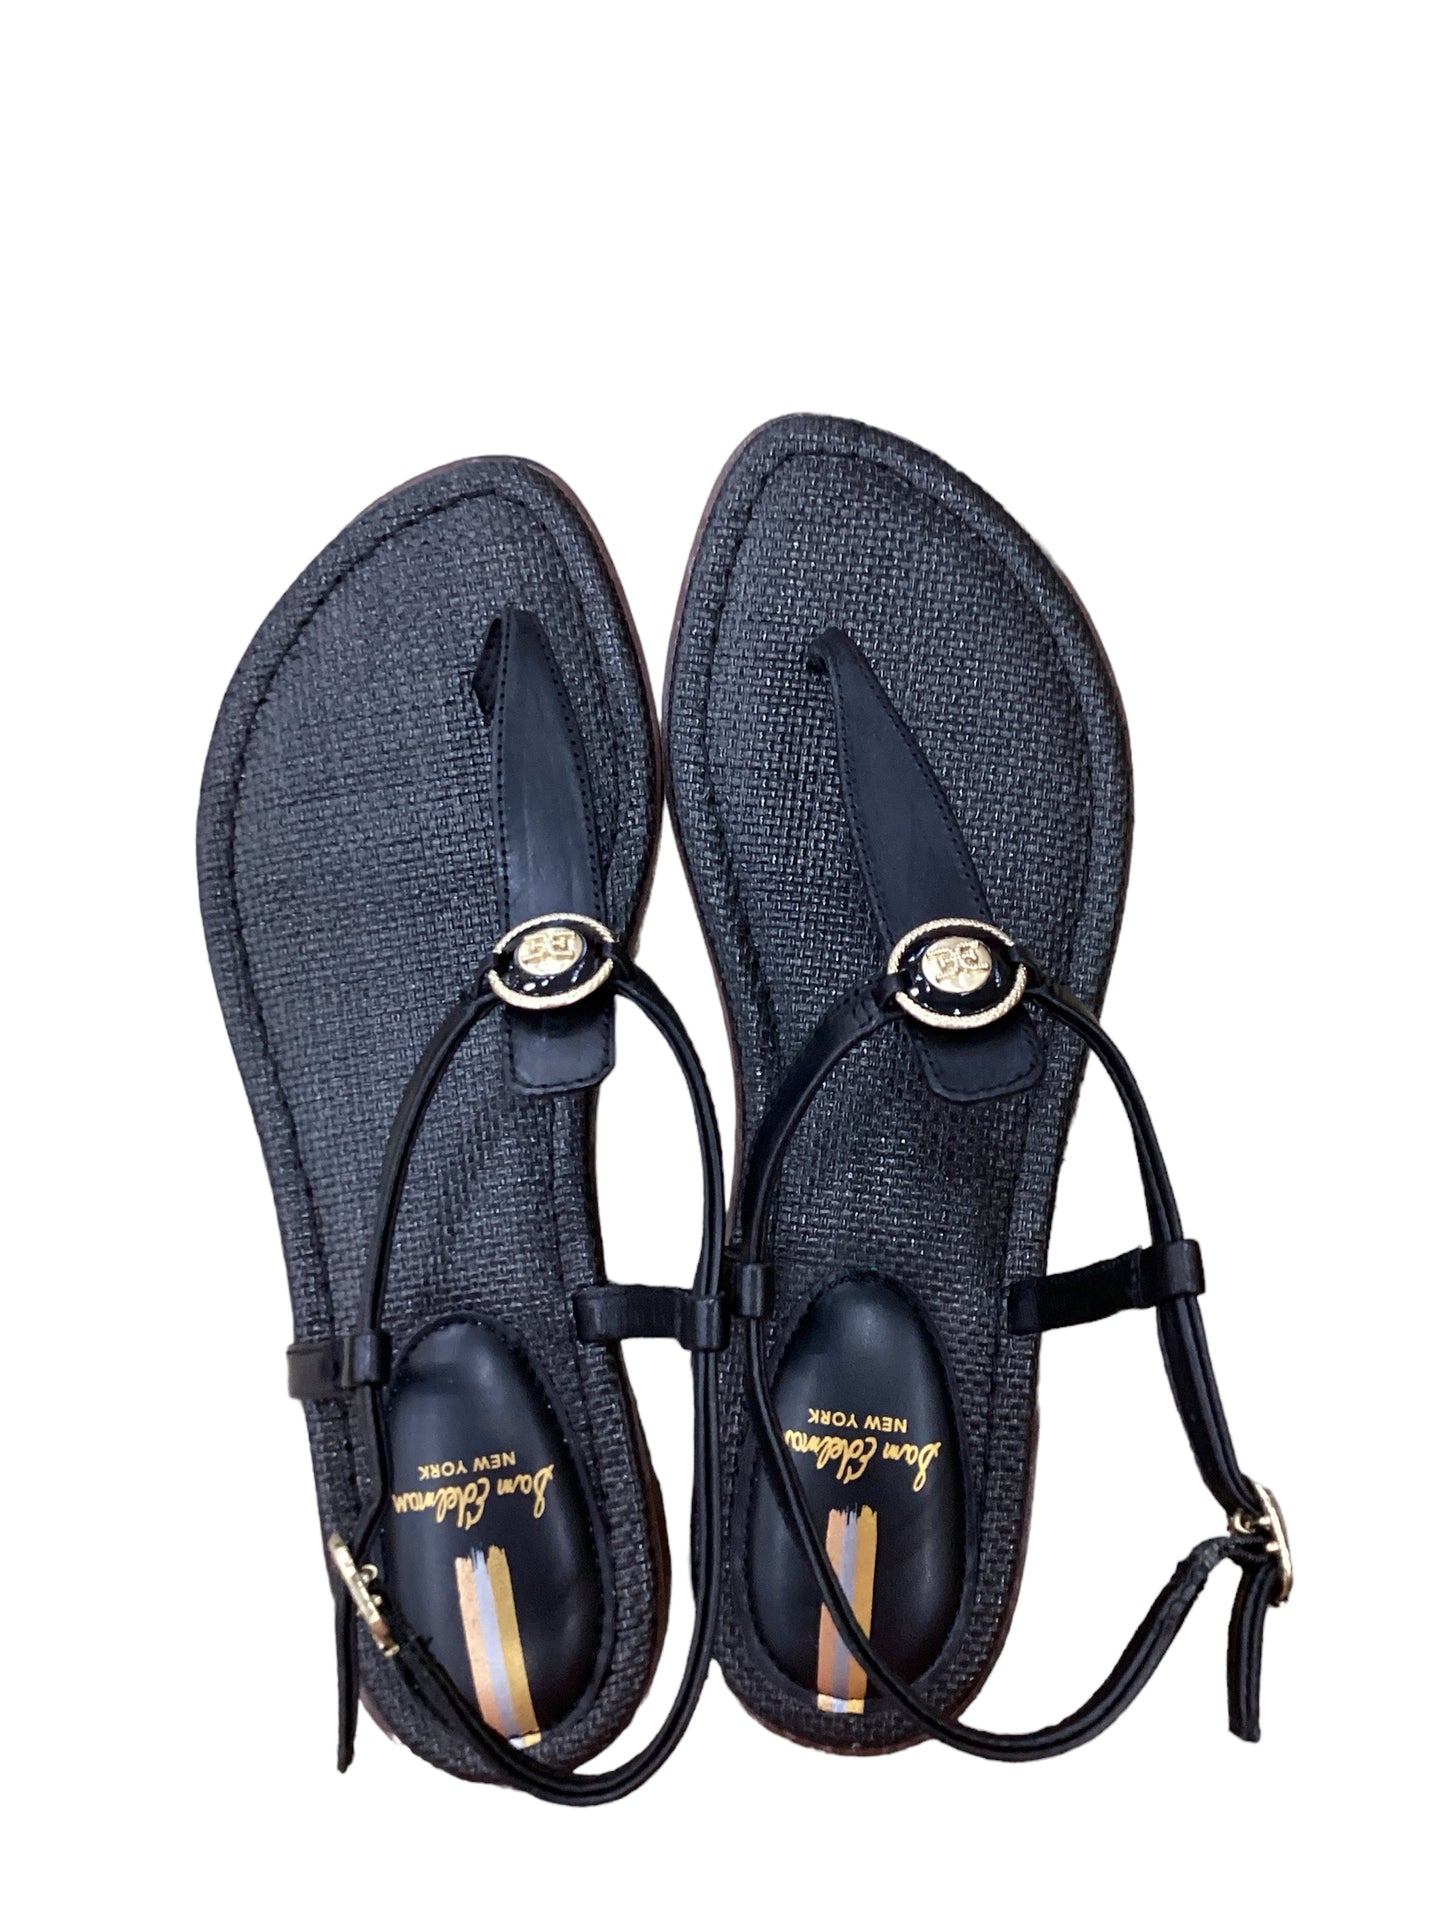 Sandals Flats By Sam Edelman  Size: 8.5